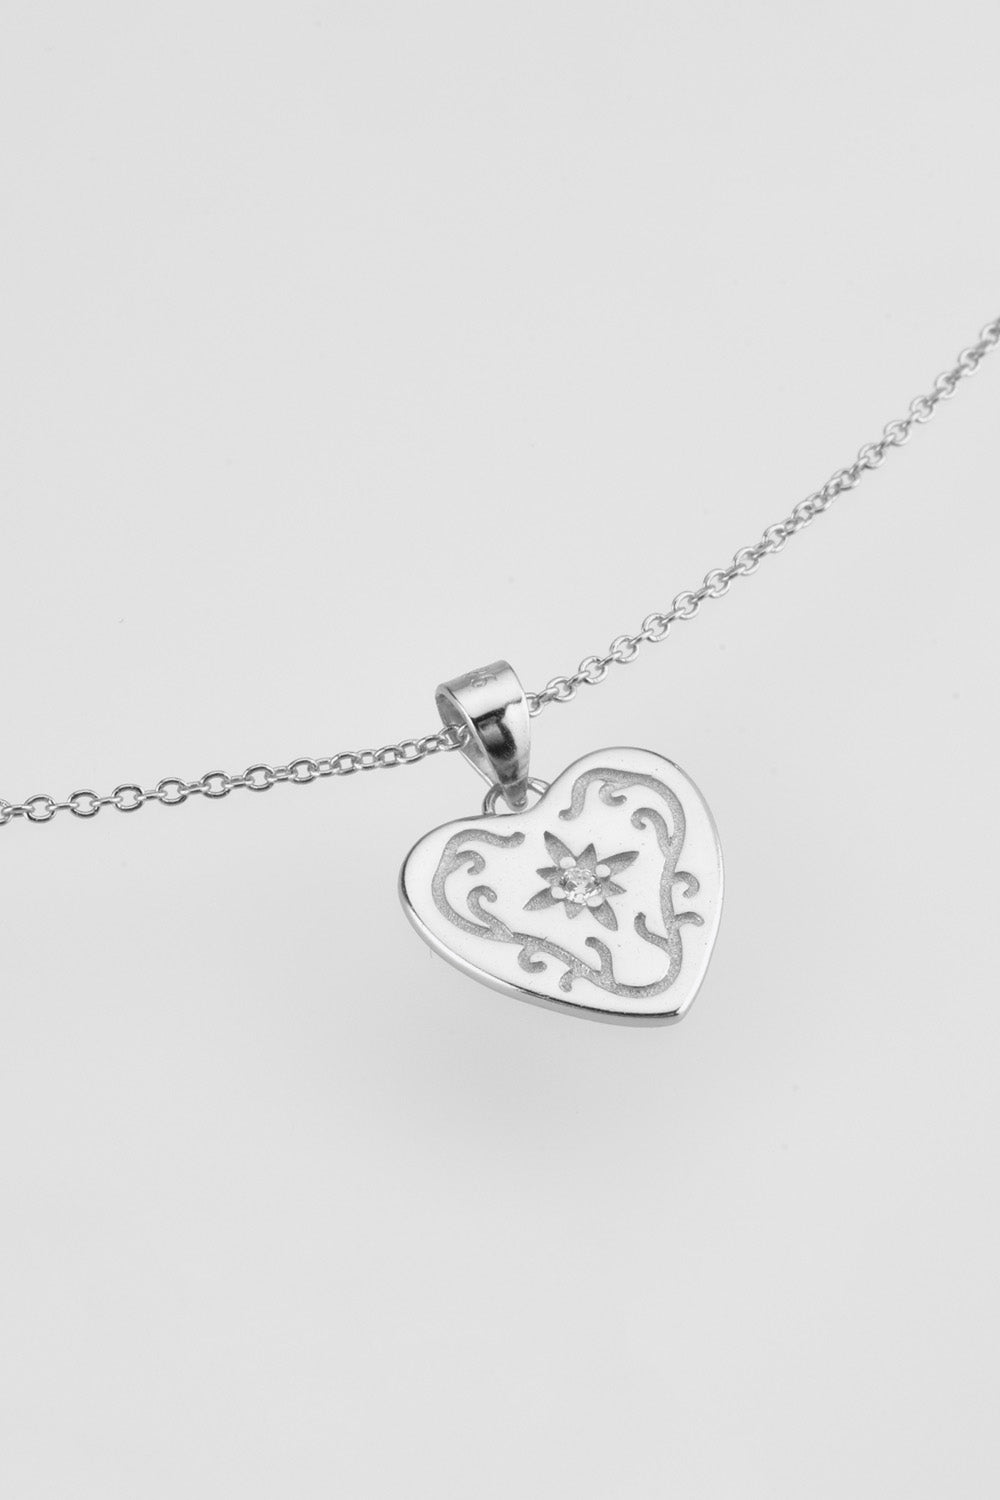 Heart Pendant 925 Sterling Silver Necklace Ti Amo I love you